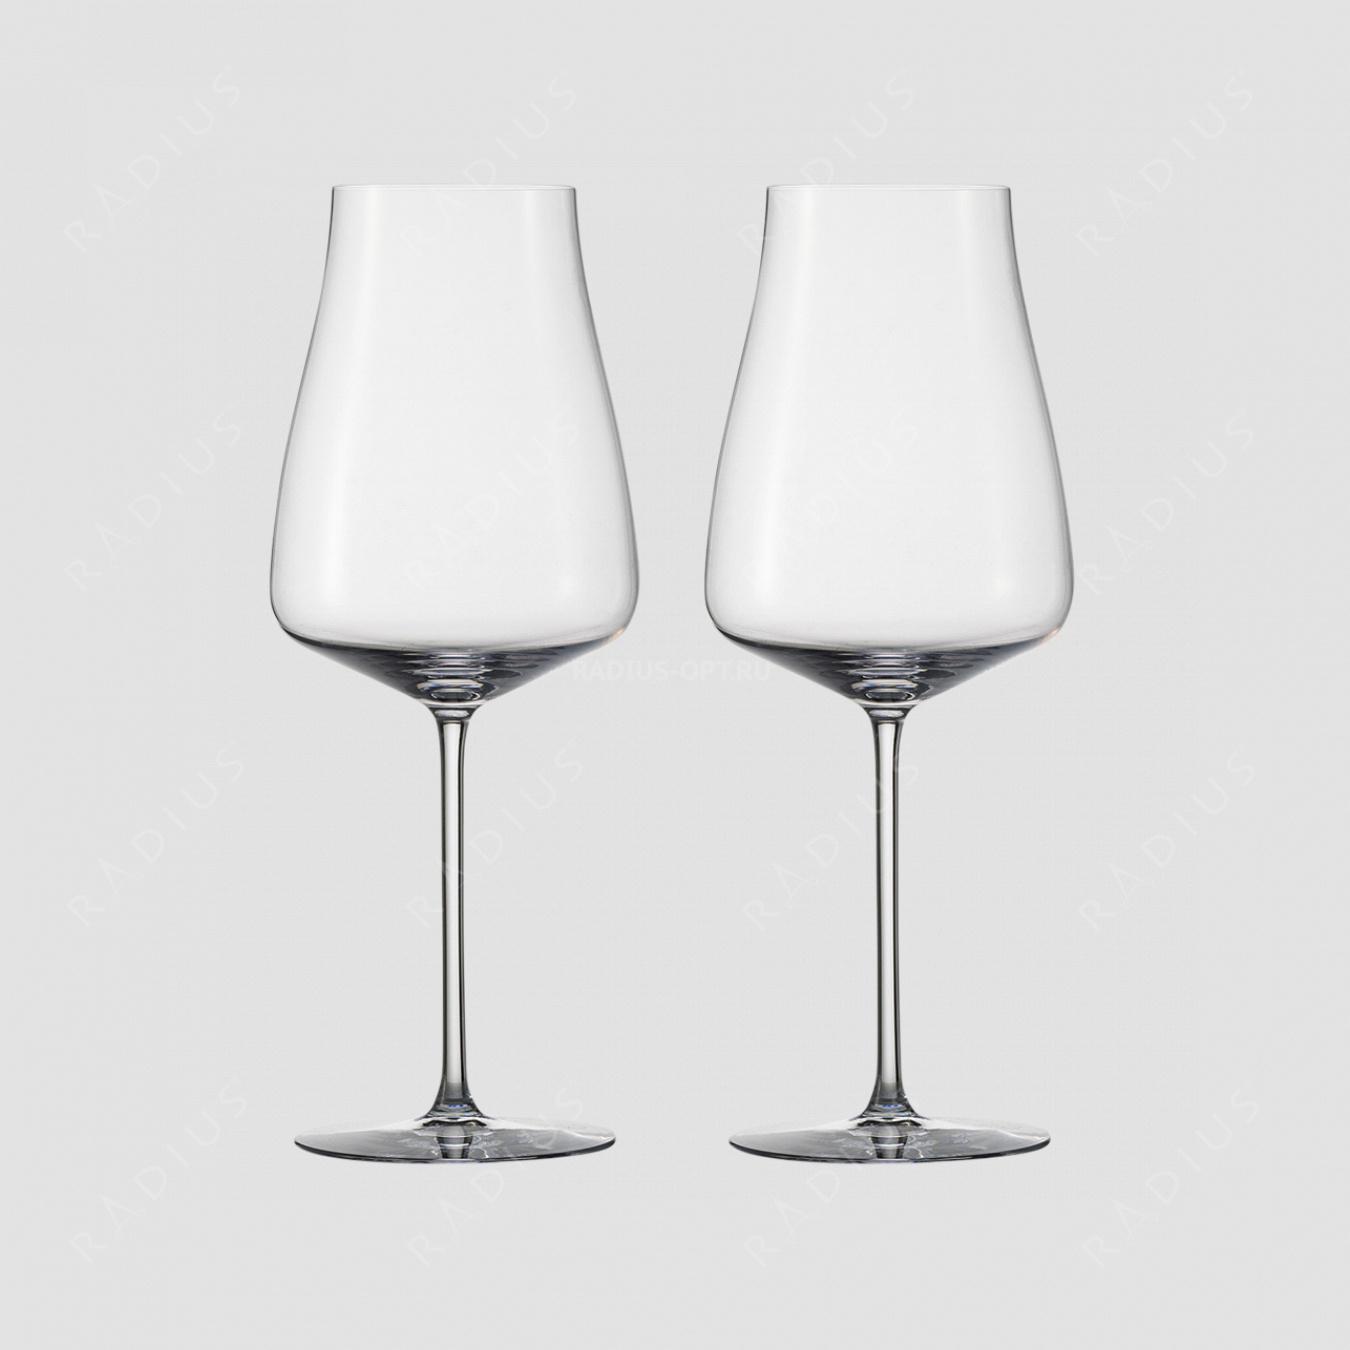 Набор бокалов для красного вина BORDEAUX, ручная работа, объем 862 мл, 2 шт., серия The Moment, ZWIESEL GLAS, Германия